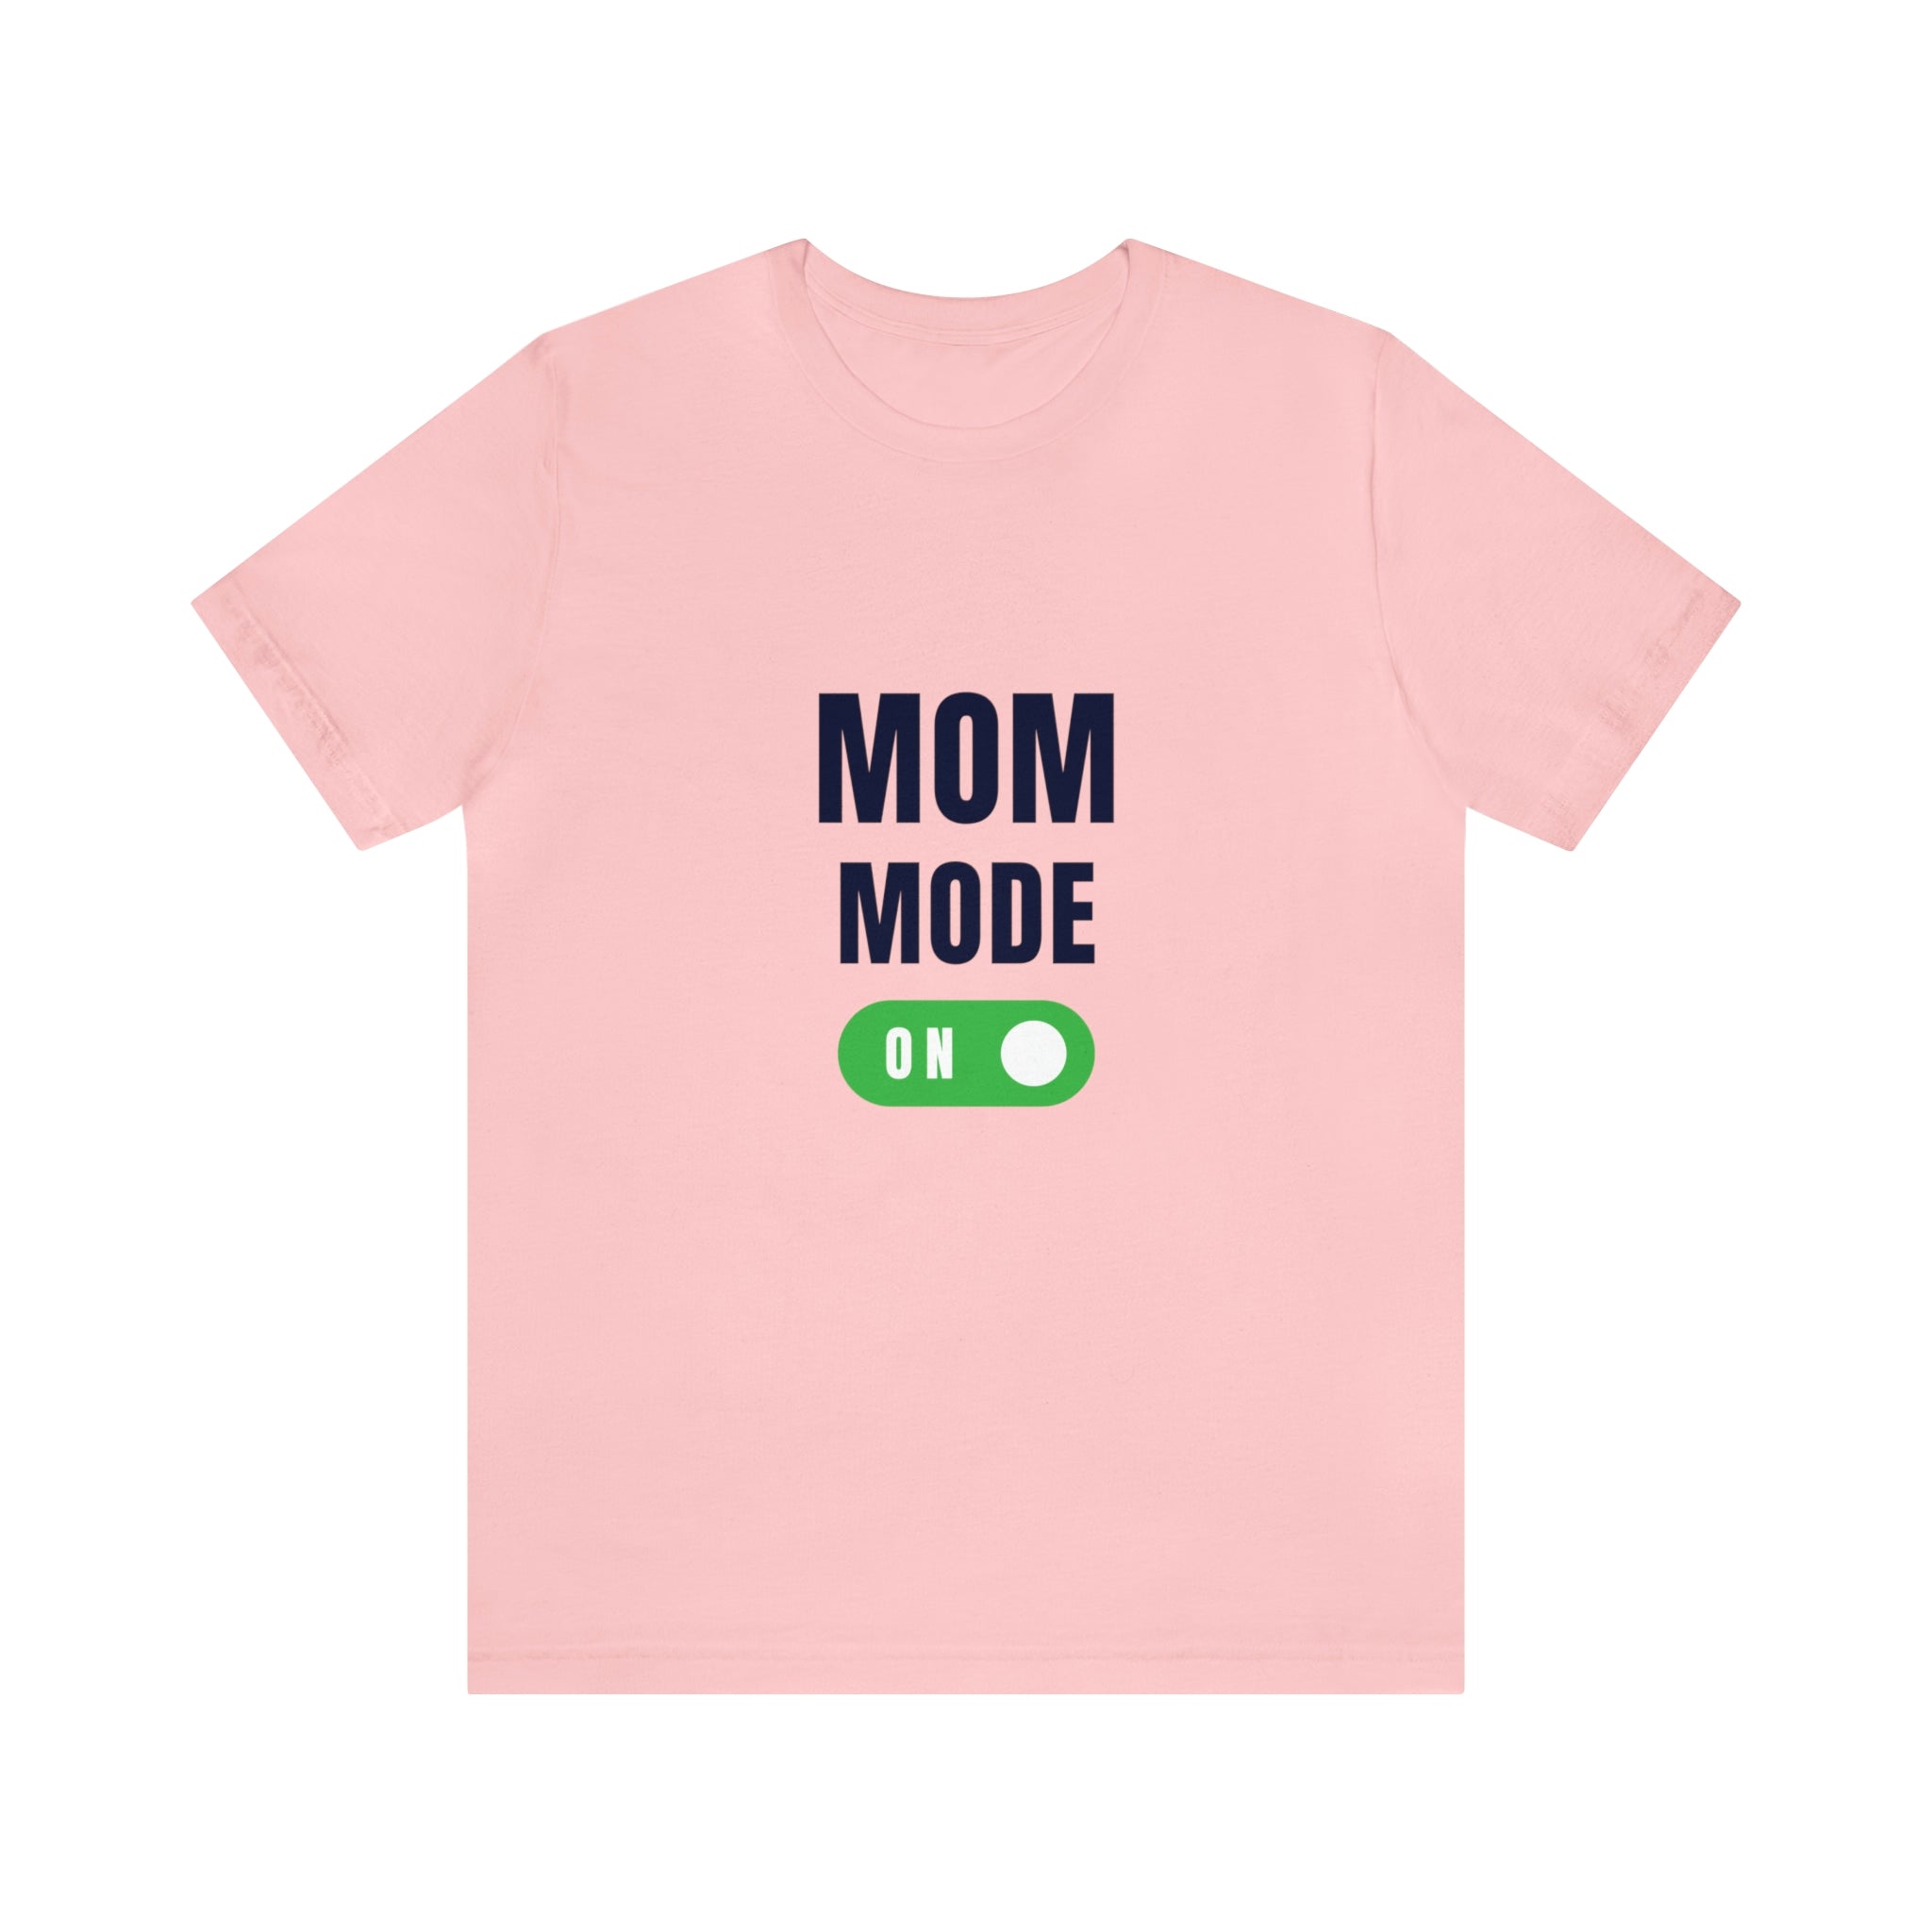 Mom Mode On Women T-shirt.